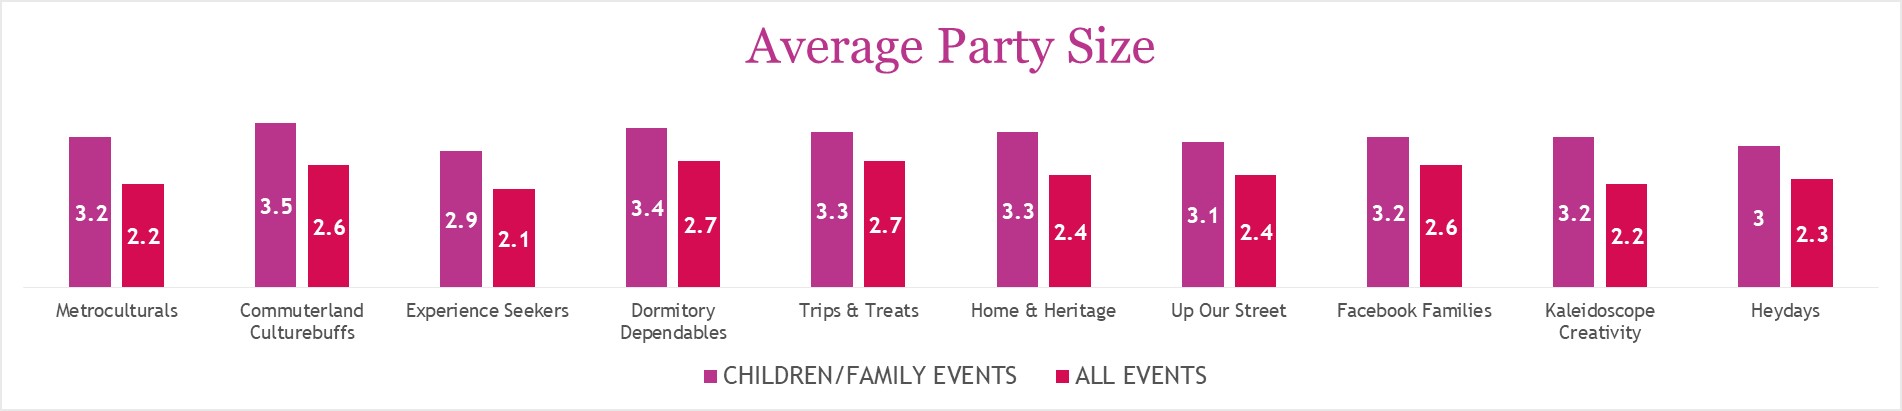 Average Party Size.jpg